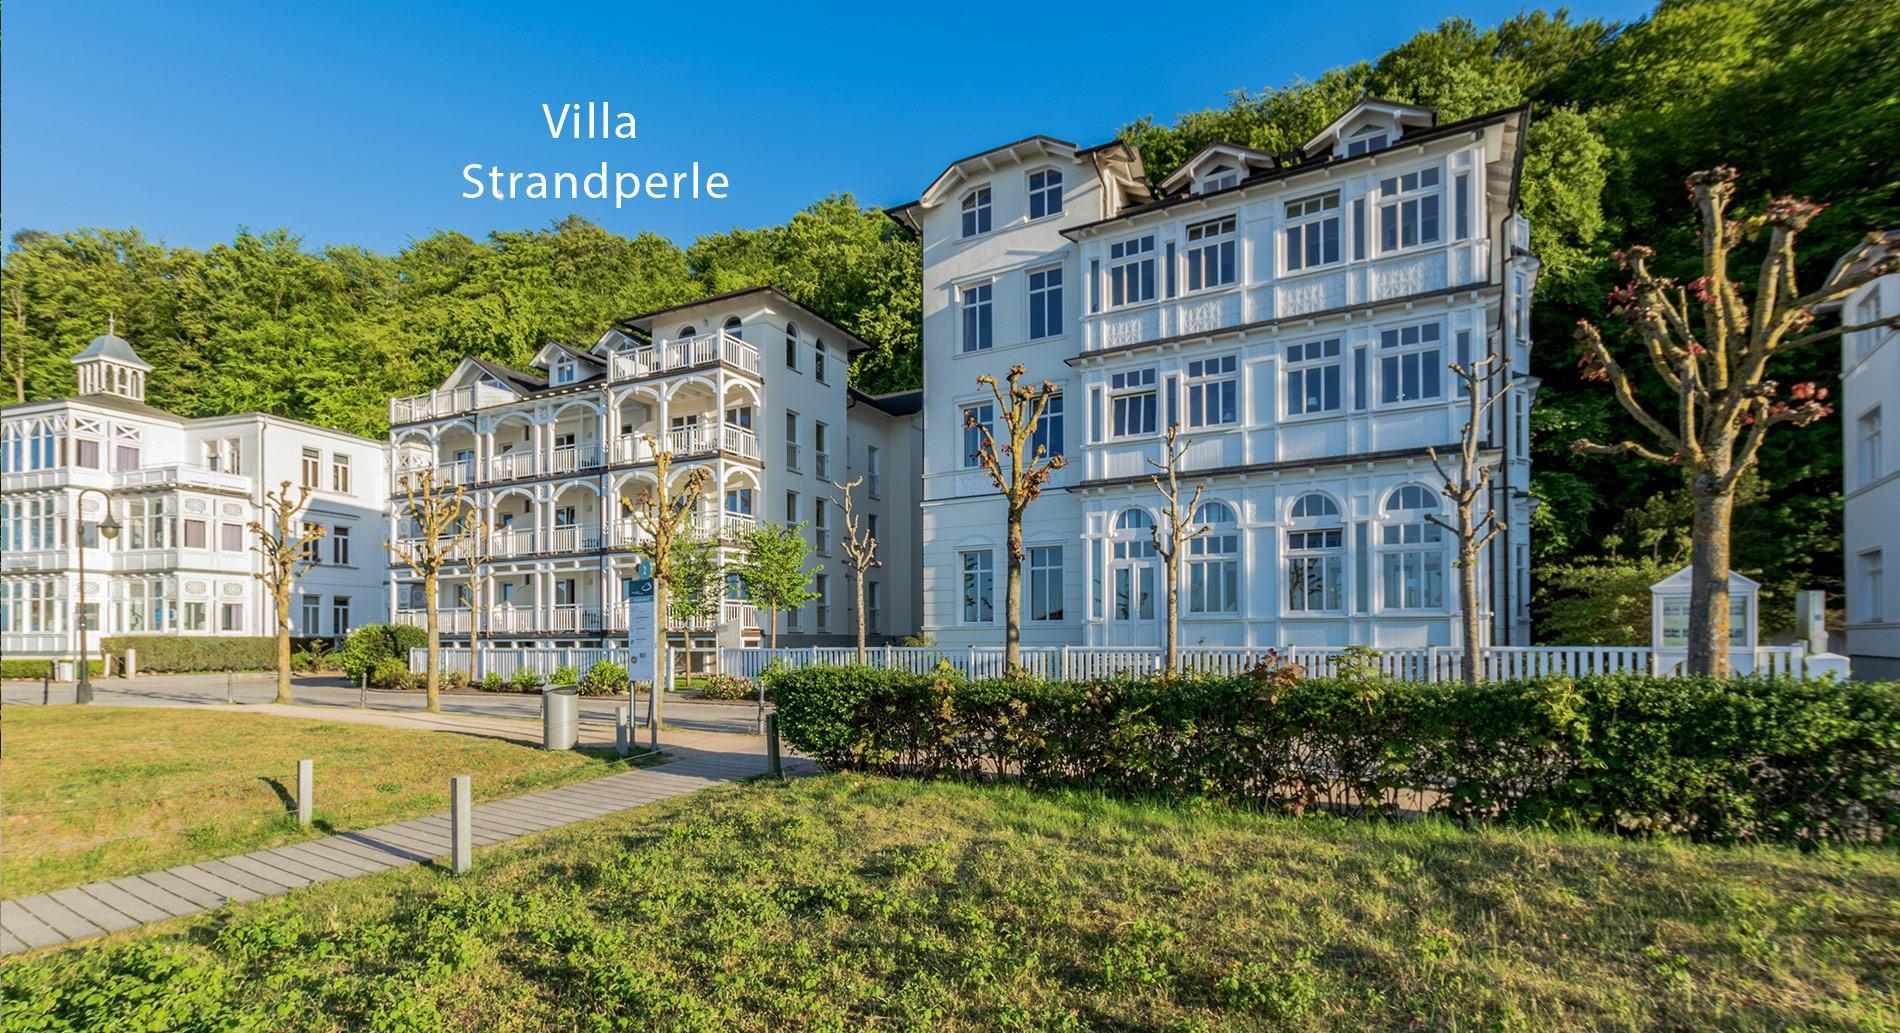 Villa Strandperle direkt an der Strandpromenade in Binz